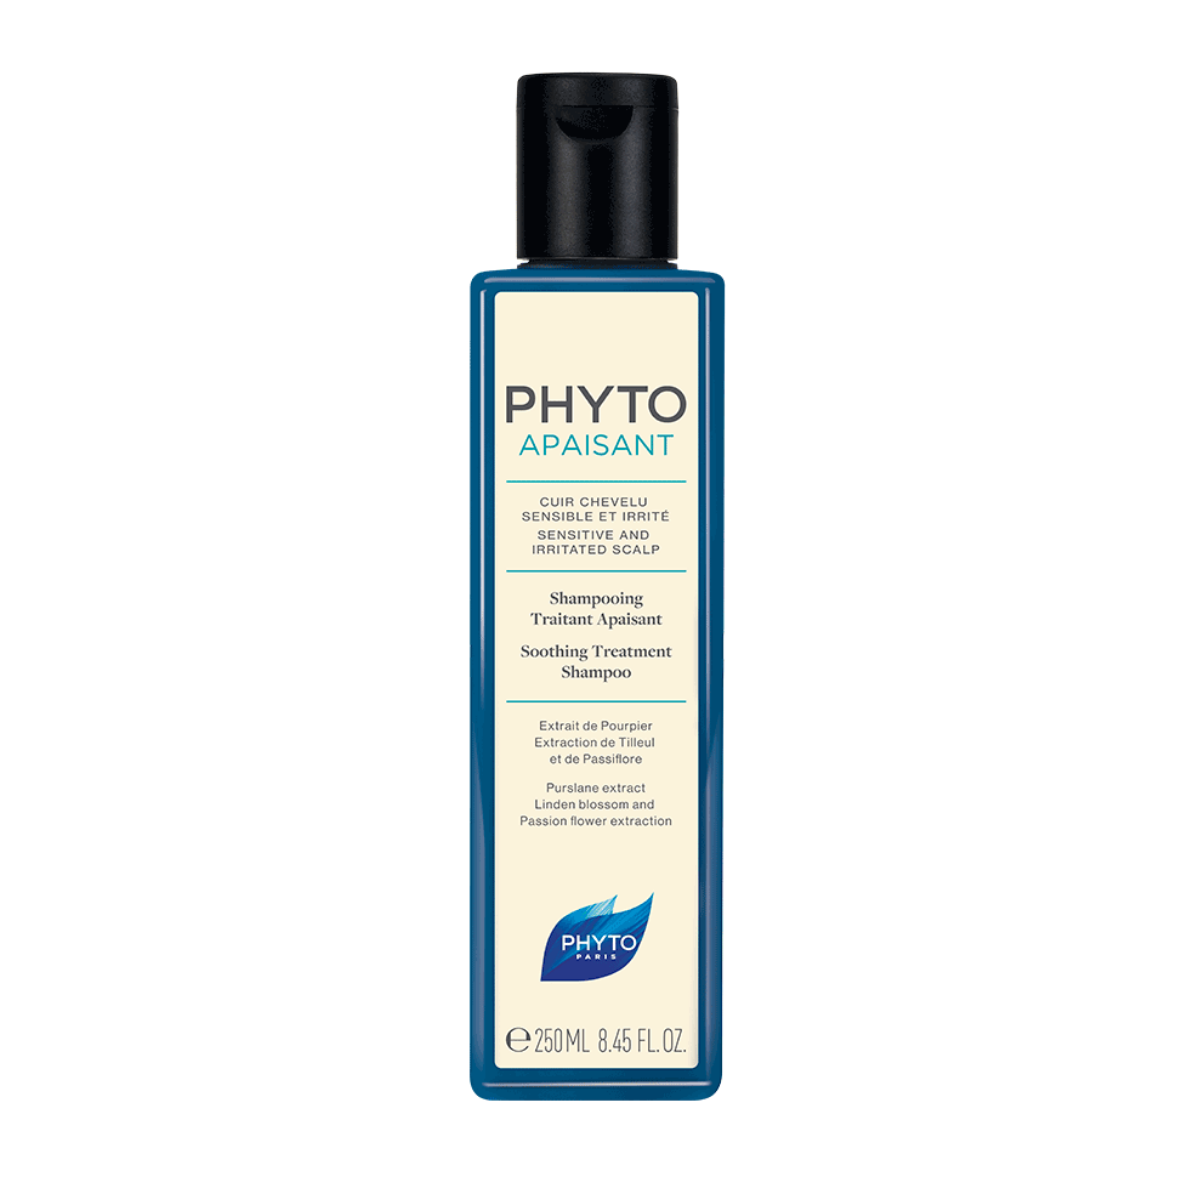 Primary image of Phytoapaisant Shampoo